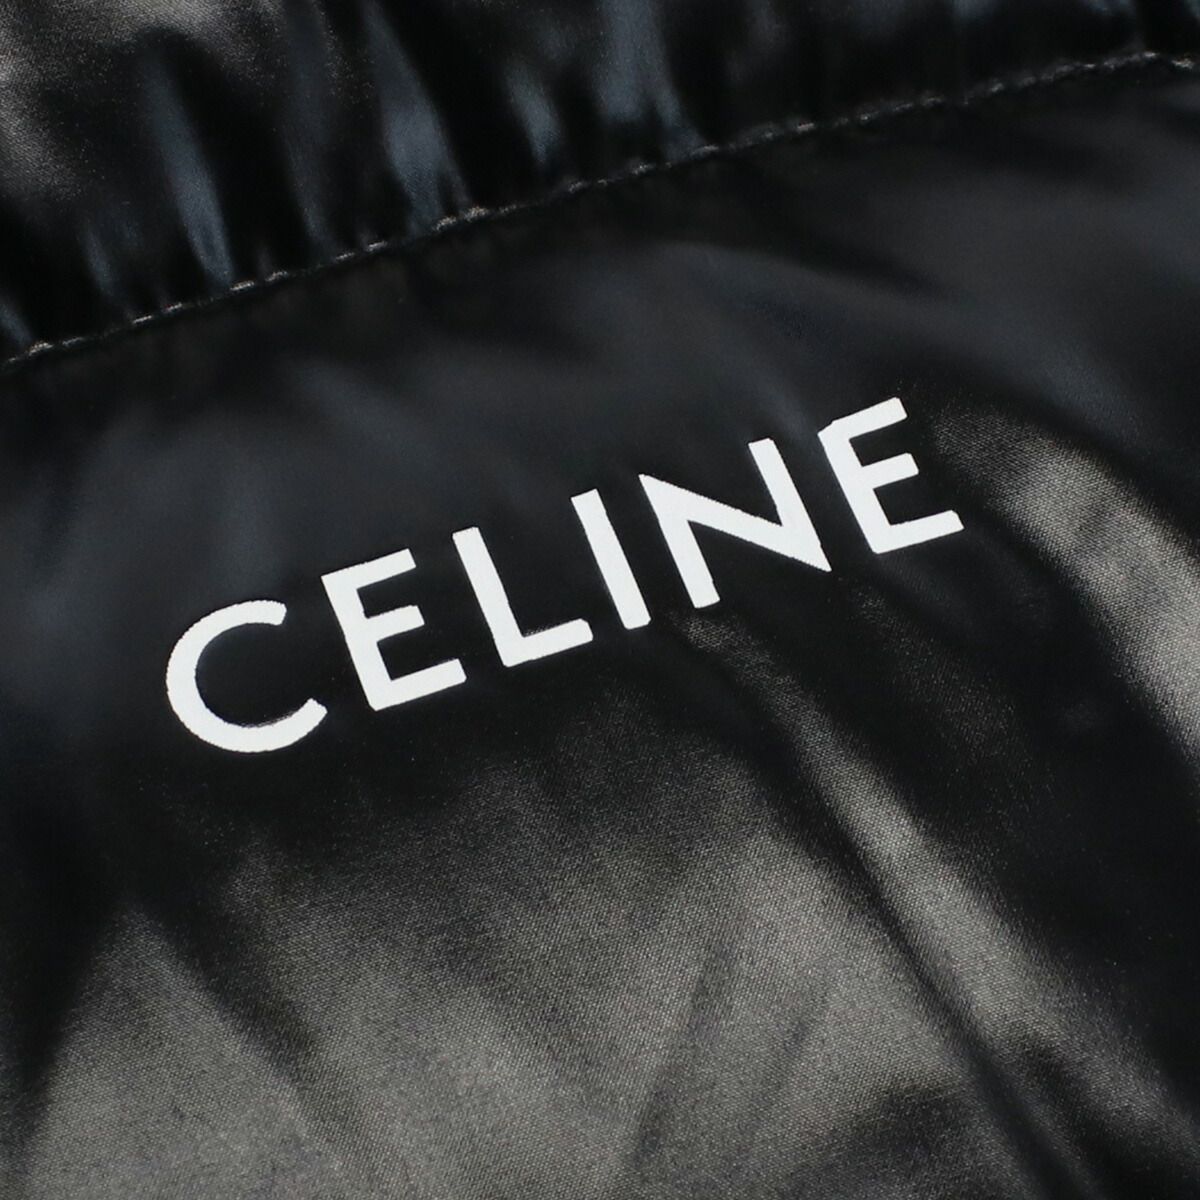 Armerie Boutique / セリーヌ CELINE メンズ ダウンジャケット 上着